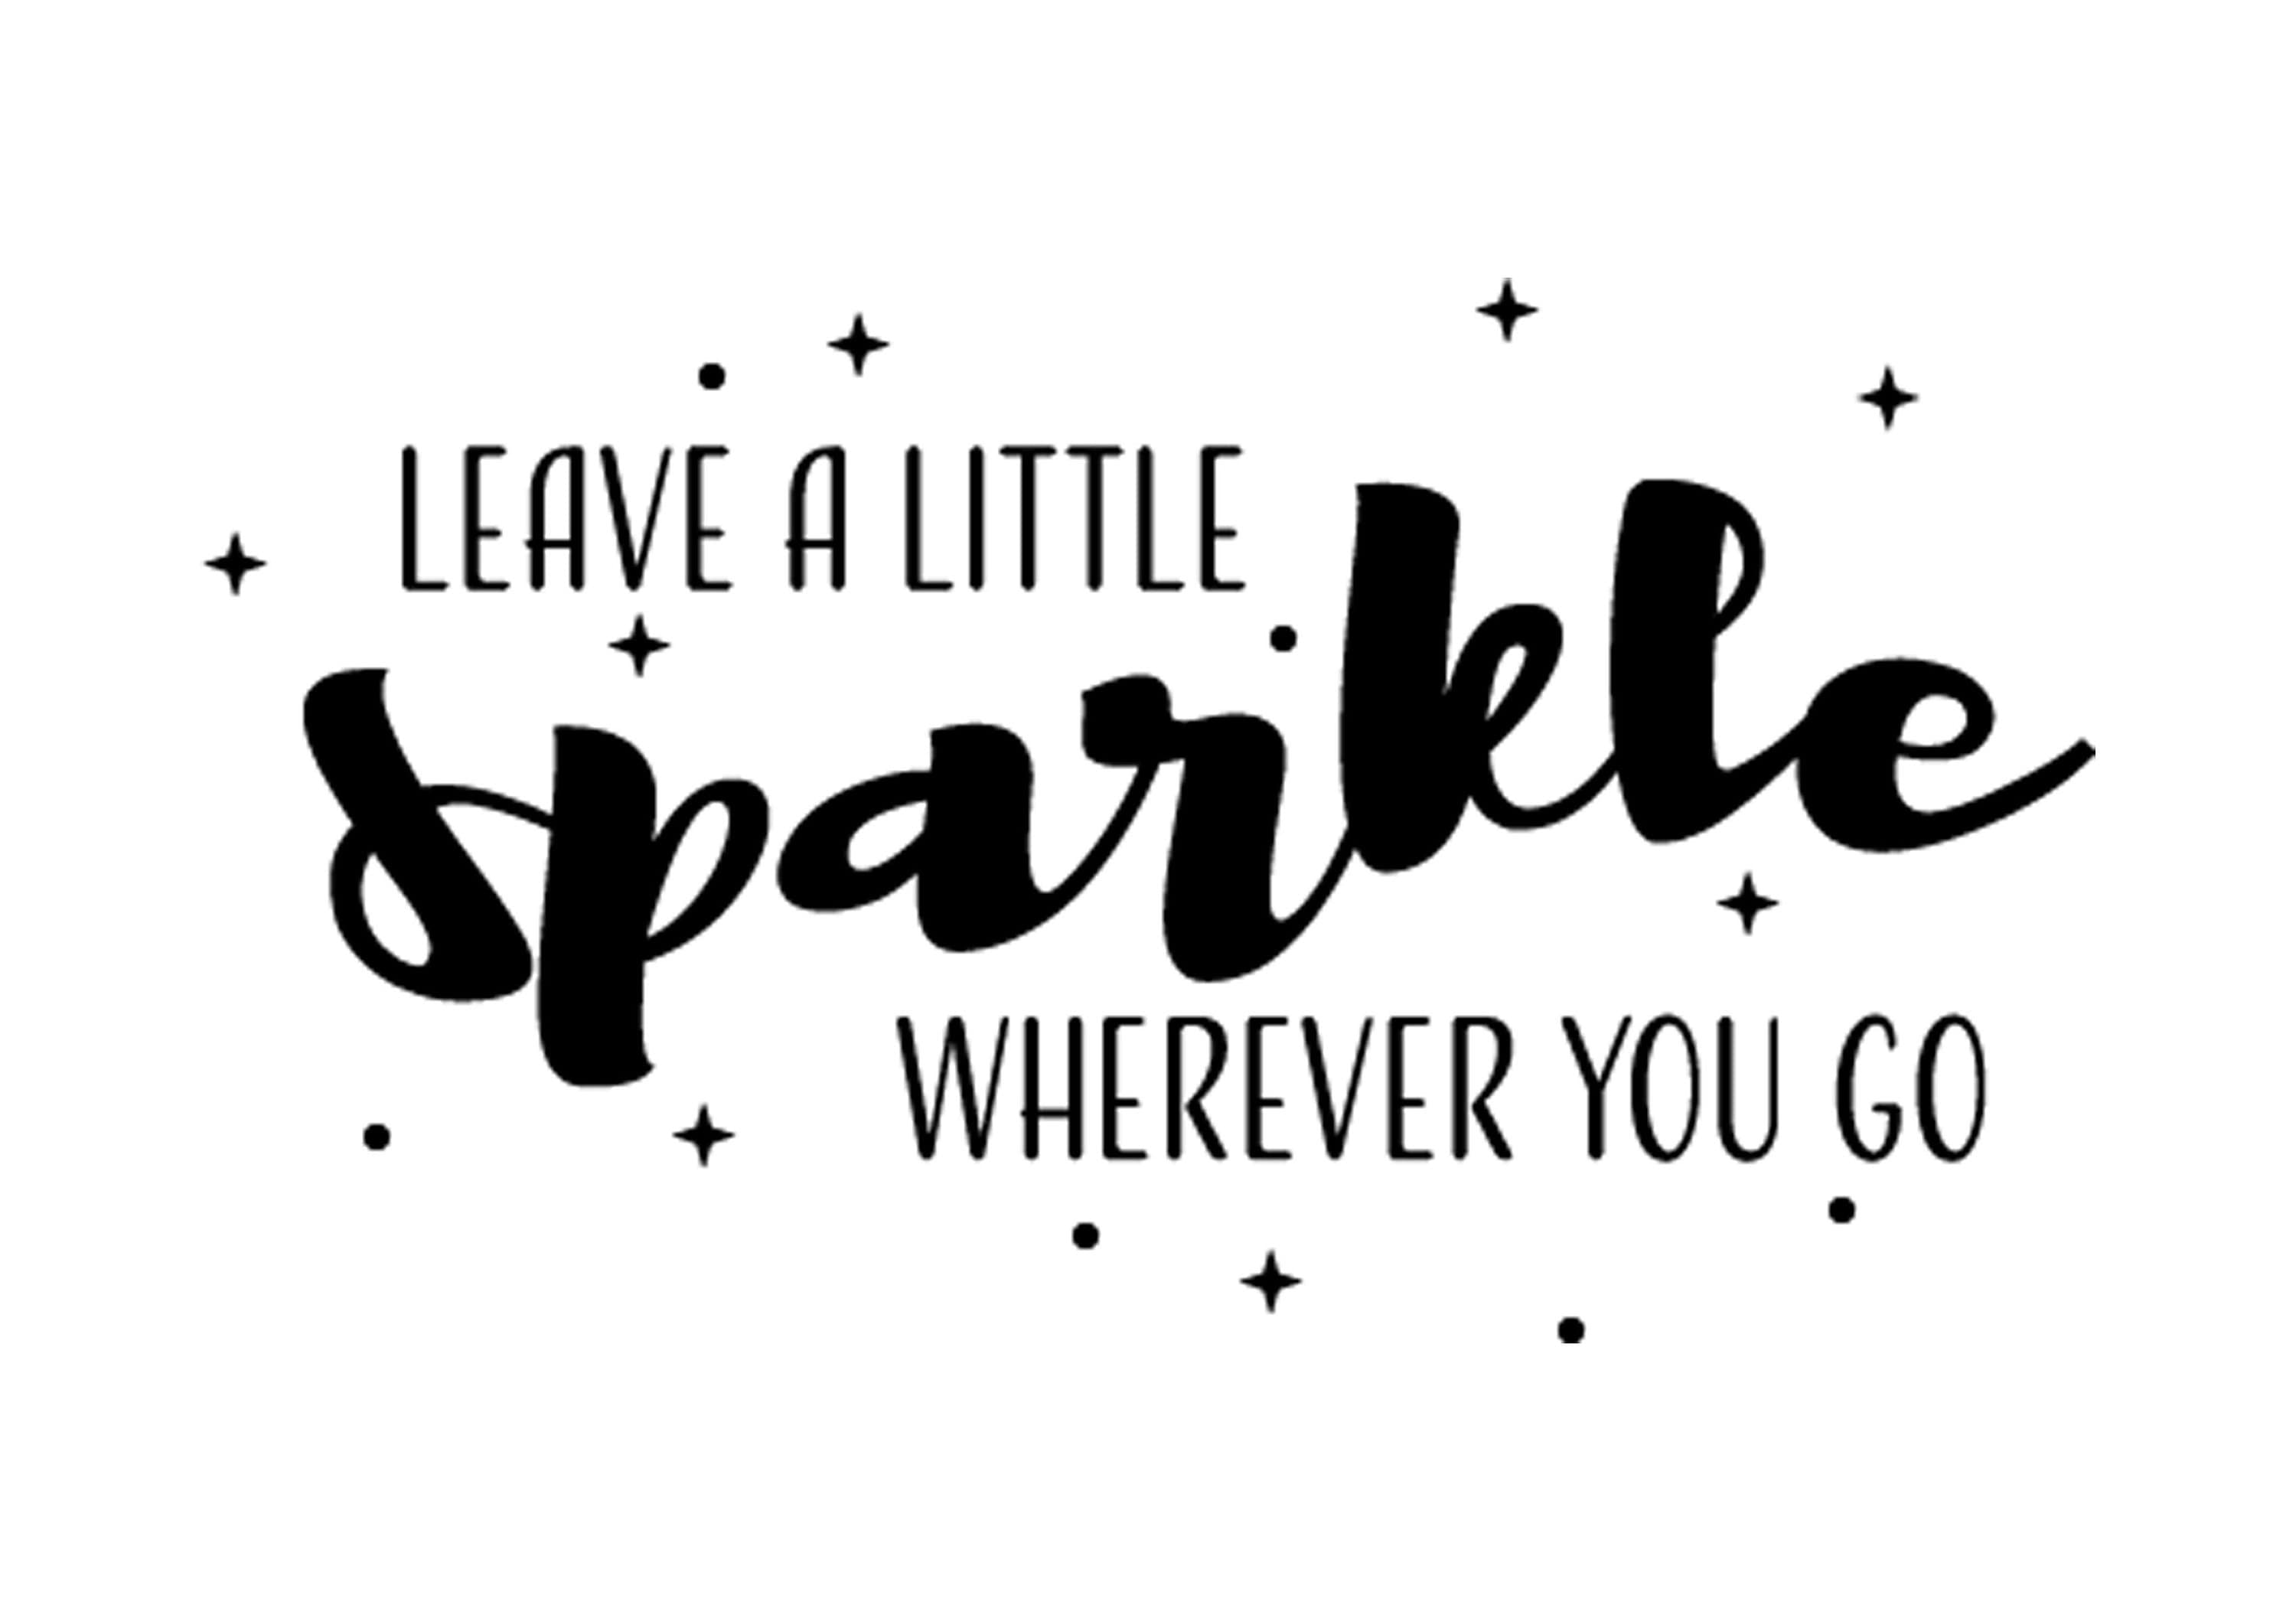 Leave a little sparkle wherever you go